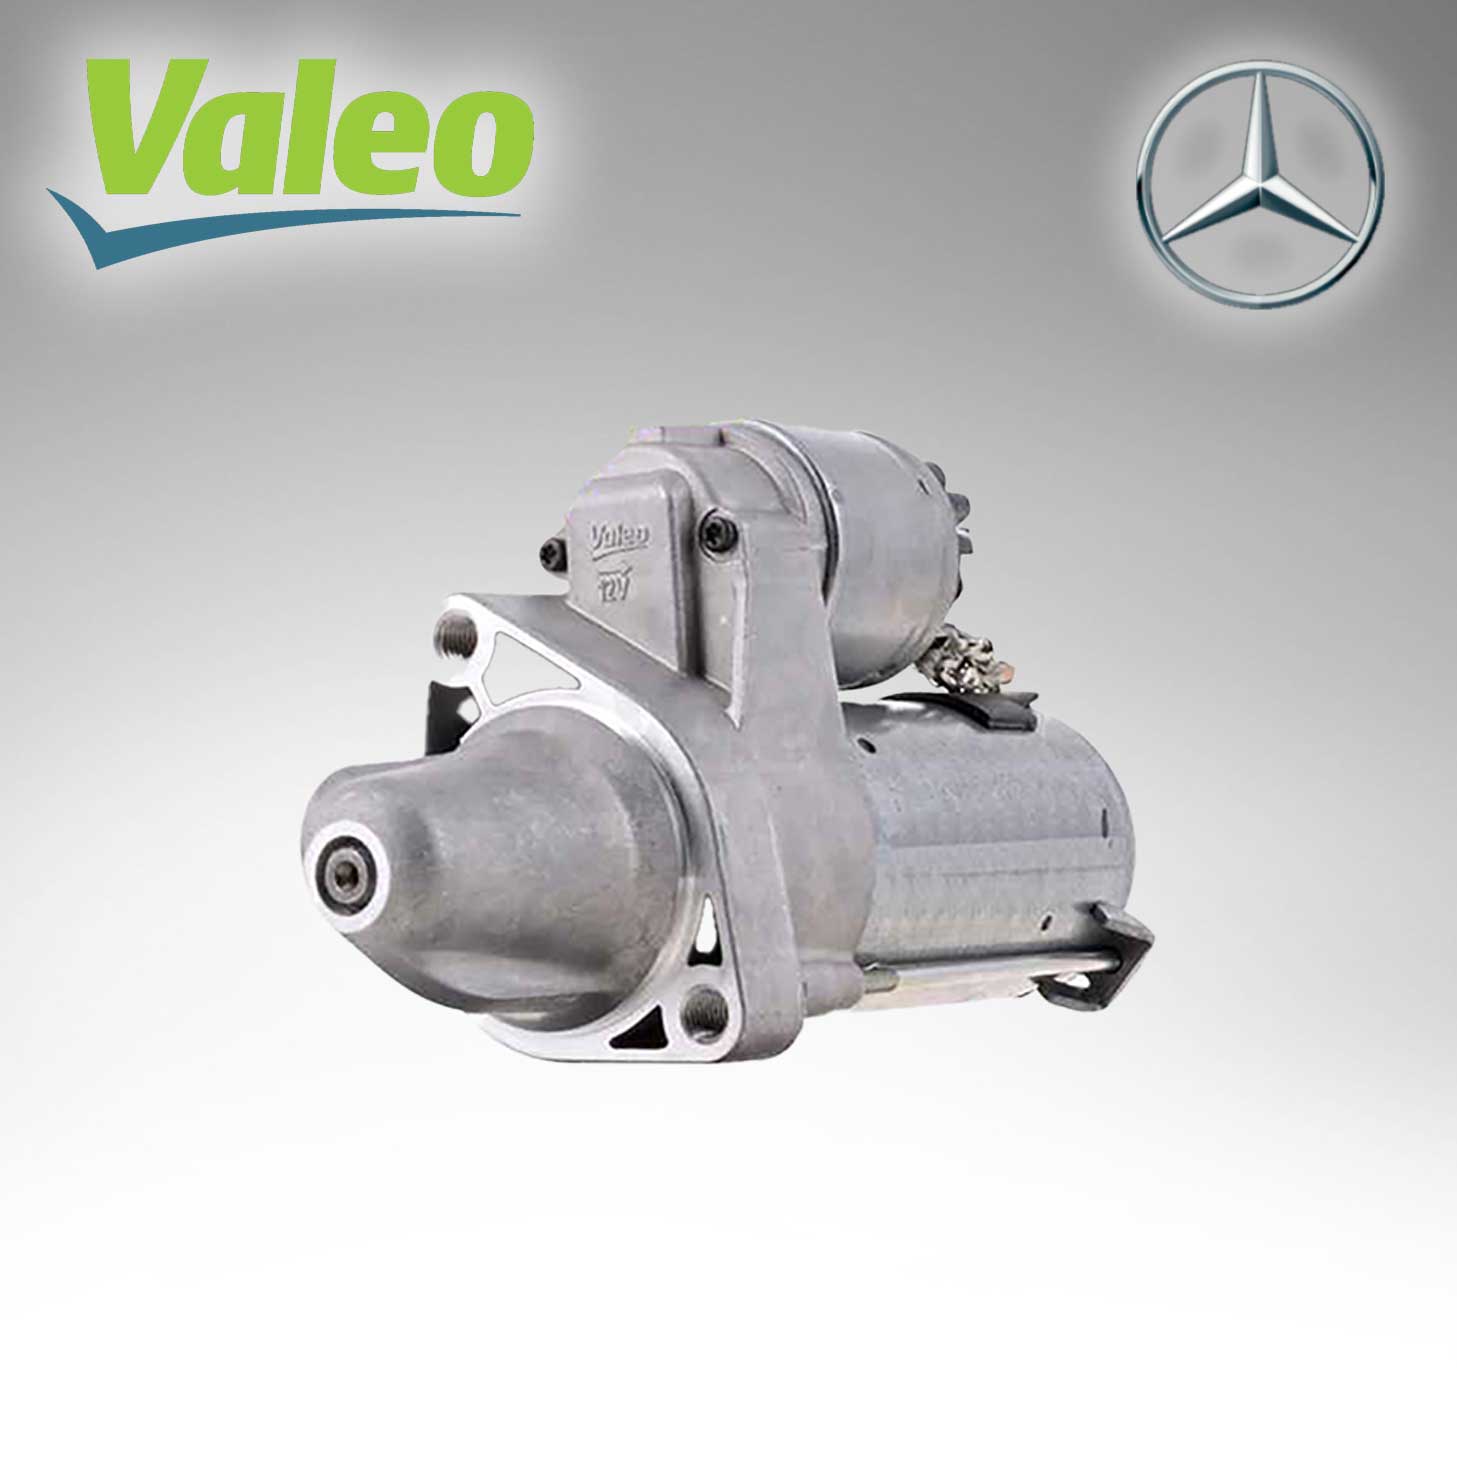 Valeo STARTER W212 (VAL#438264) For Mercedes Benz 2789060800